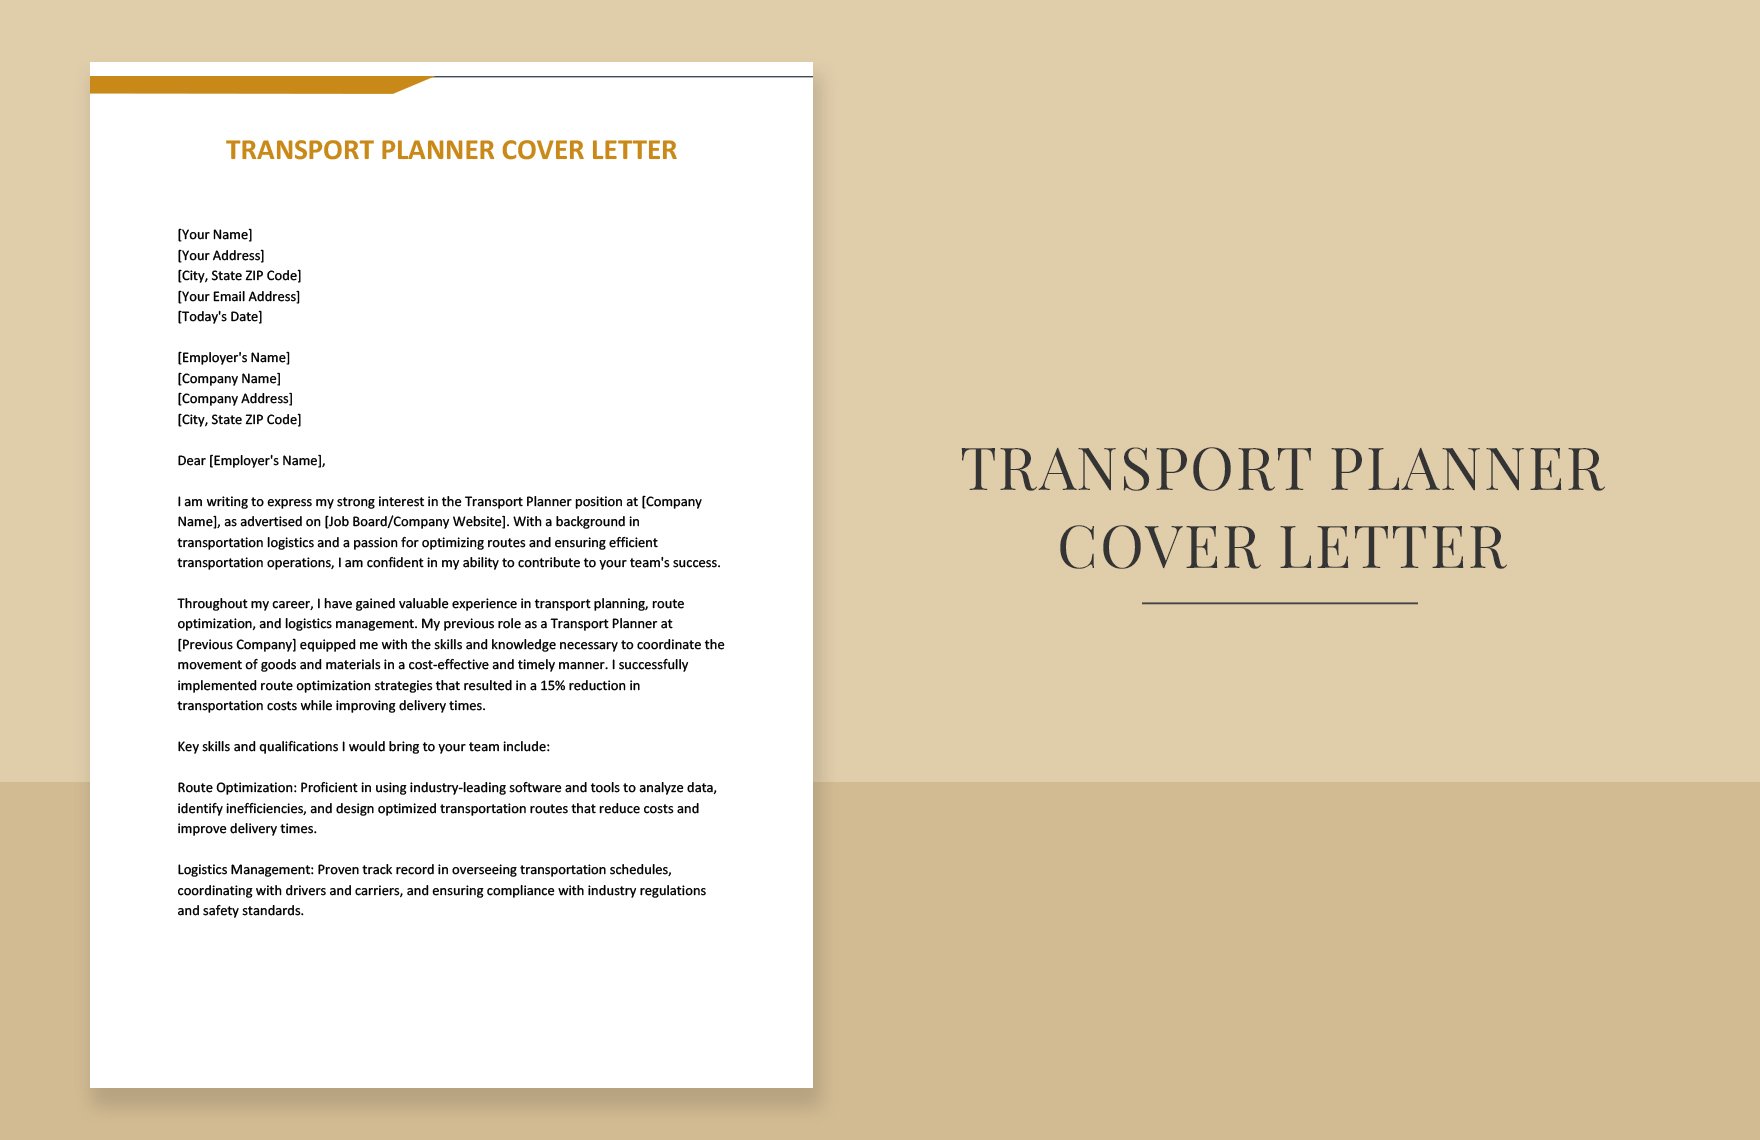 Transport Planner Cover Letter in Word, Google Docs